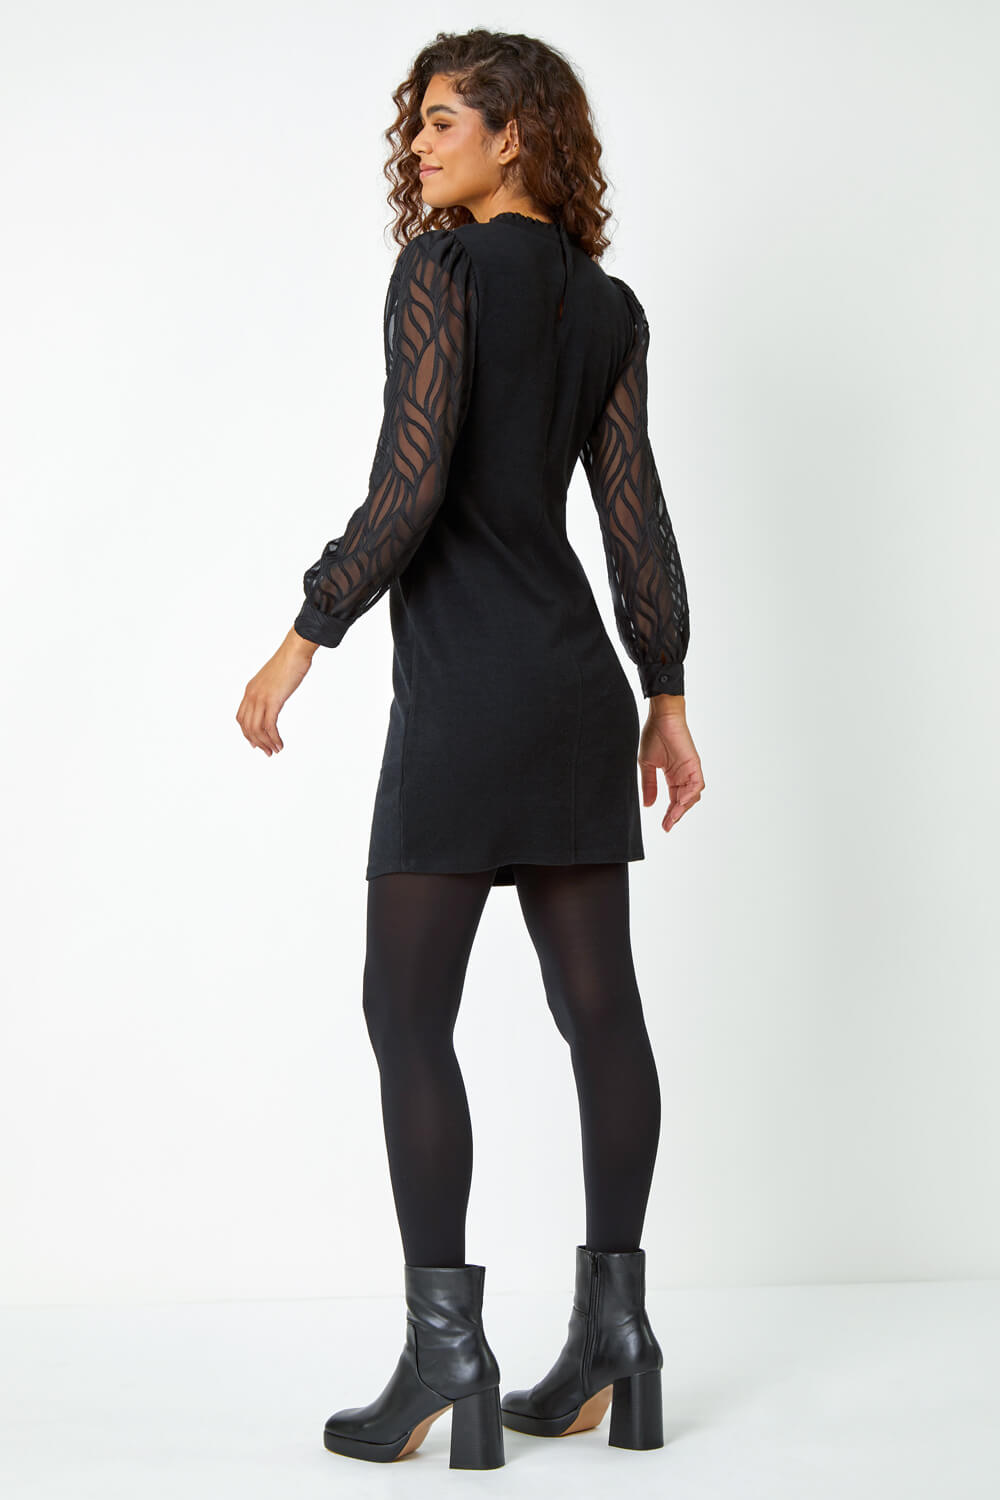 Black Contrast Chiffon Sleeve Stretch Dress, Image 3 of 5